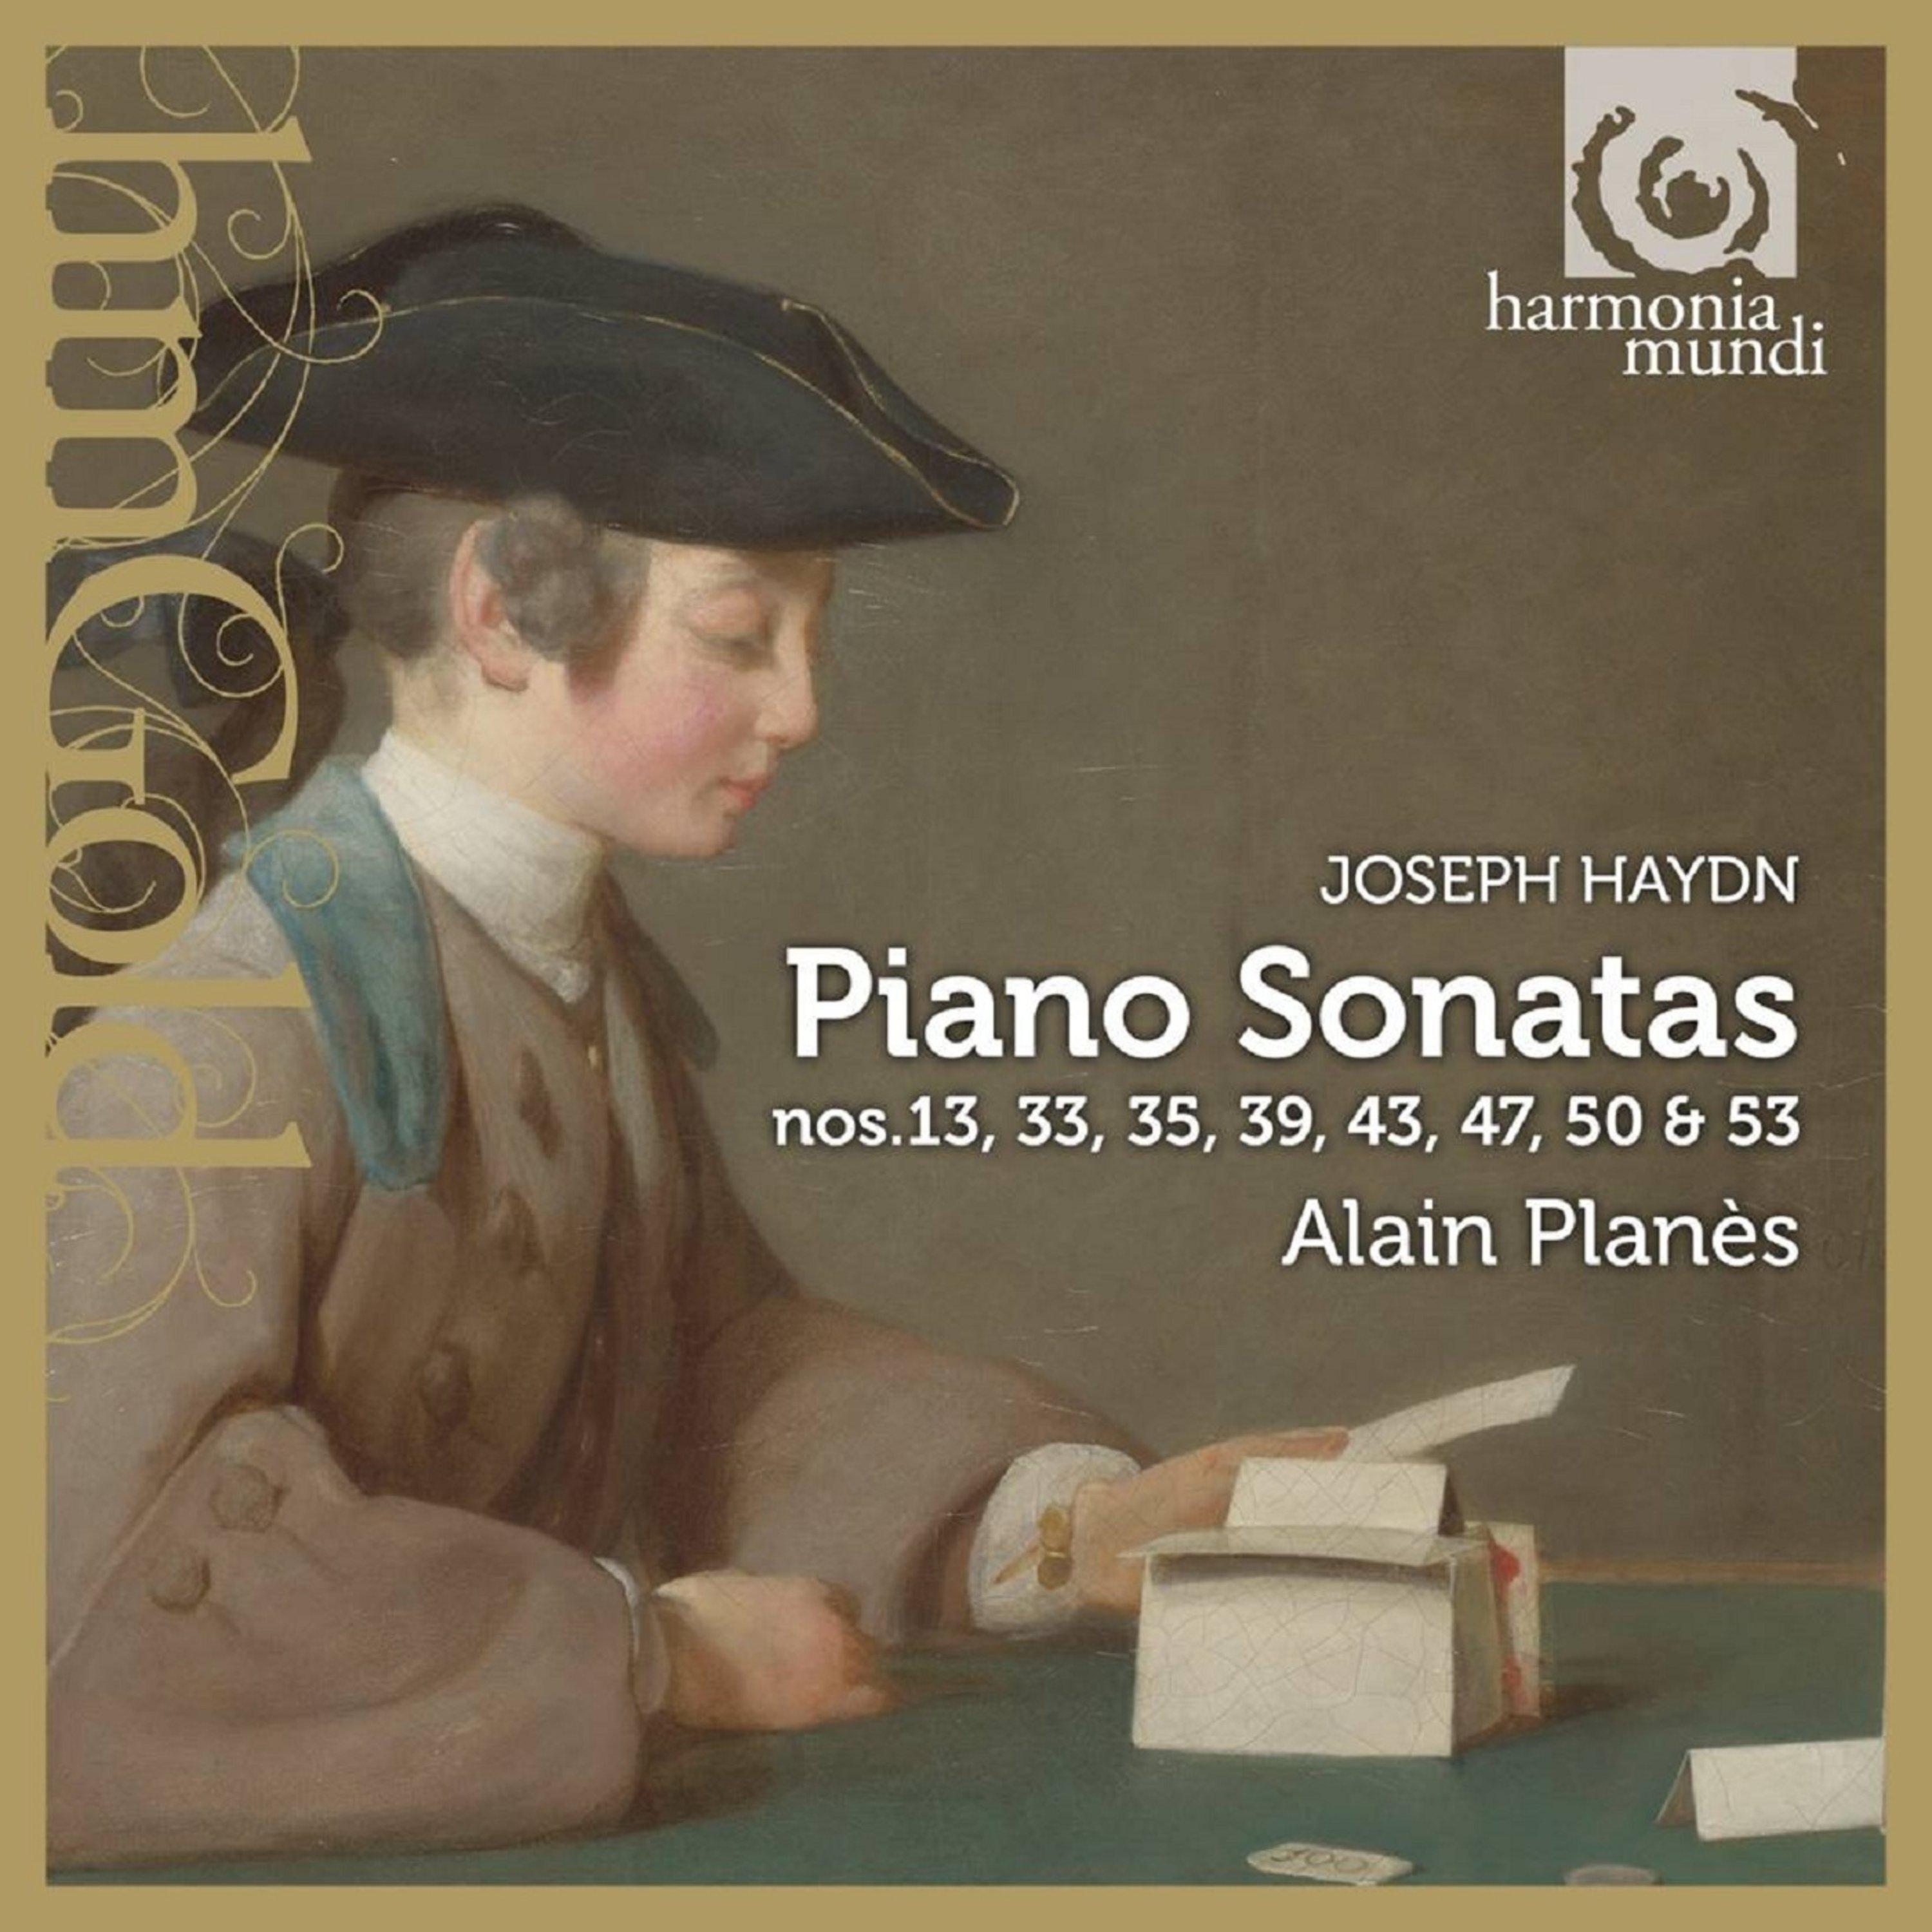 Alain Planes - Sonate No. 35 en La Bémol Majeur, Hob.XVI/43: I. Moderato